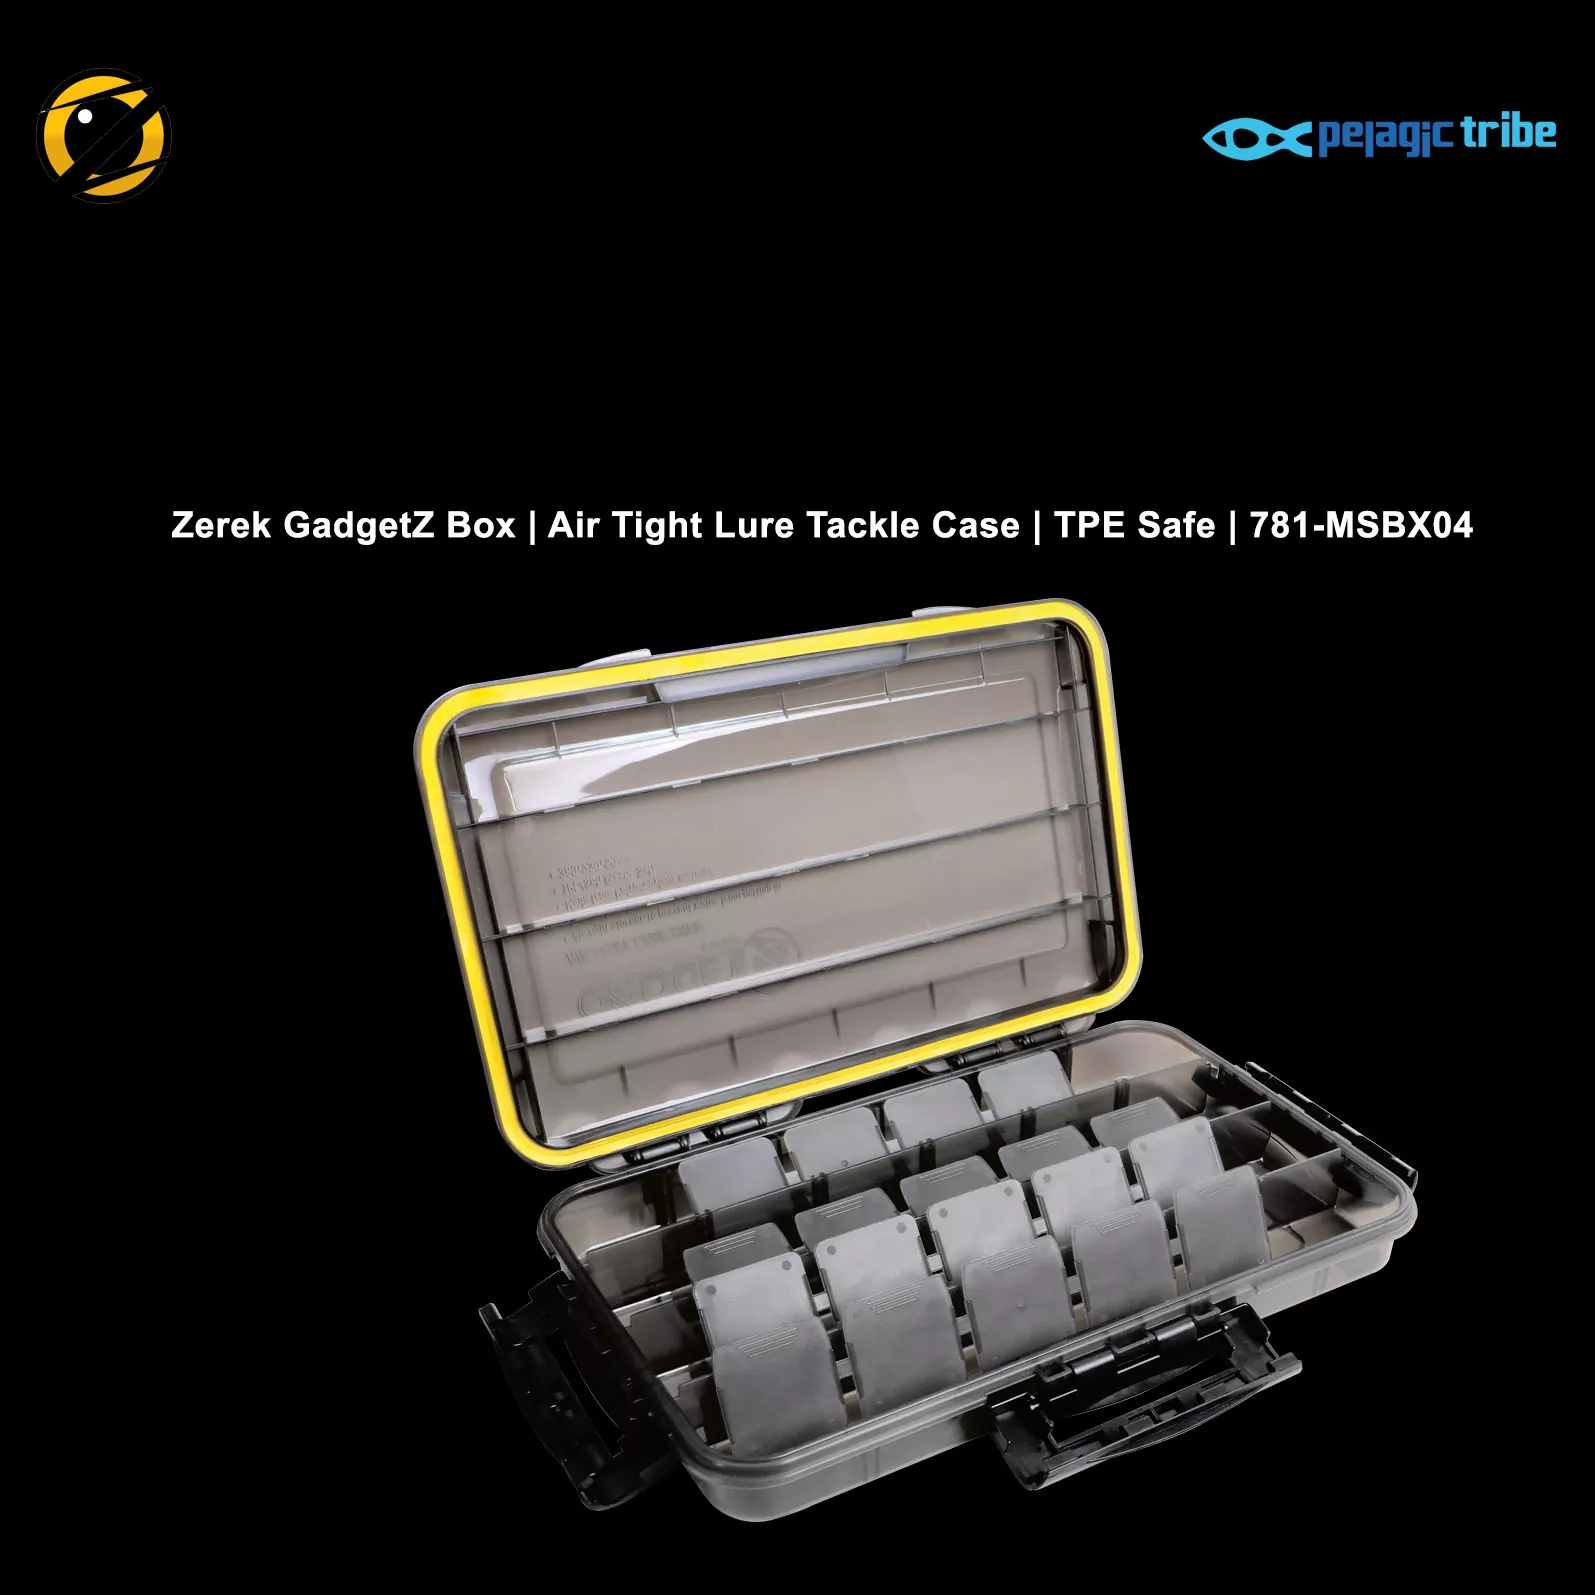 Zerek GadgetZ Box, Air Tight Lure Tackle Case, Water Proof, TPE Safe